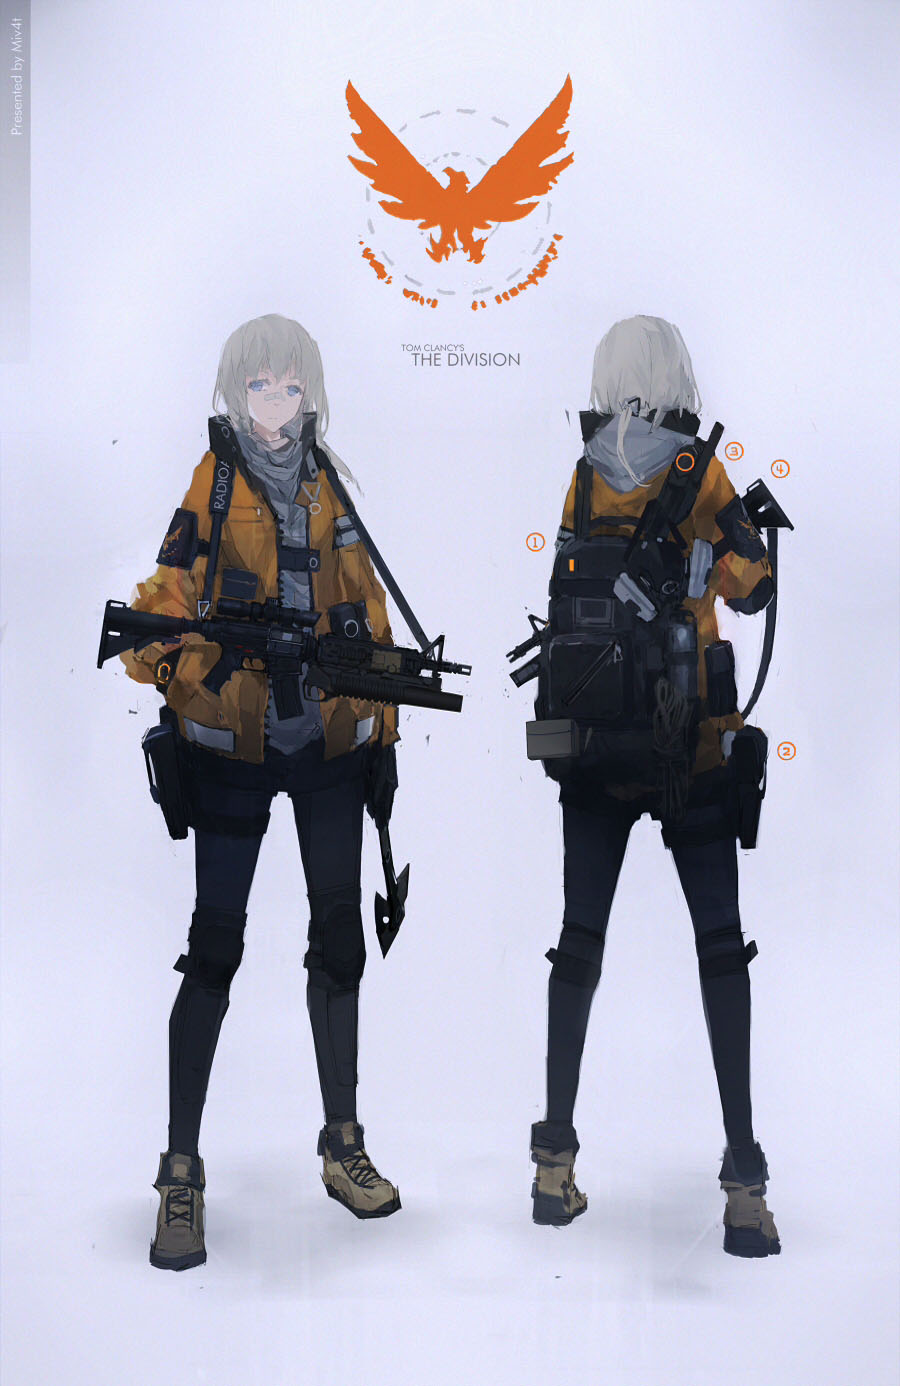 Anime 900x1386 Miv4t anime anime girls Tom Clancy's The Division gun assault rifle gray hair